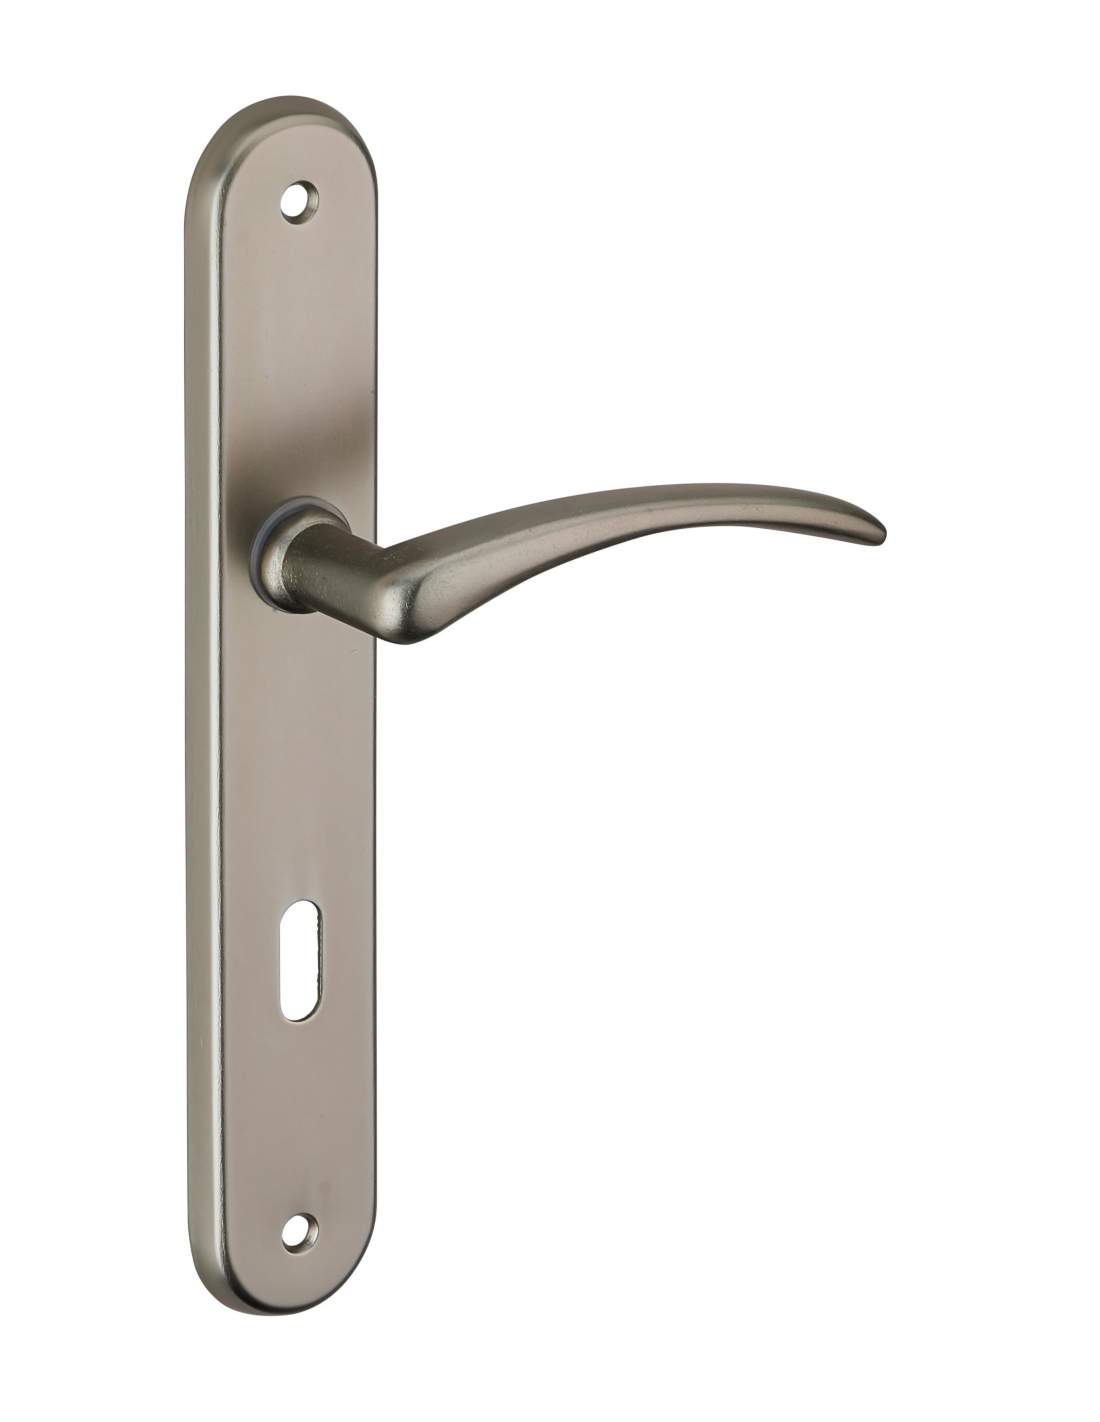 Selen door handle, satin nickel aluminium, E195, with key hole